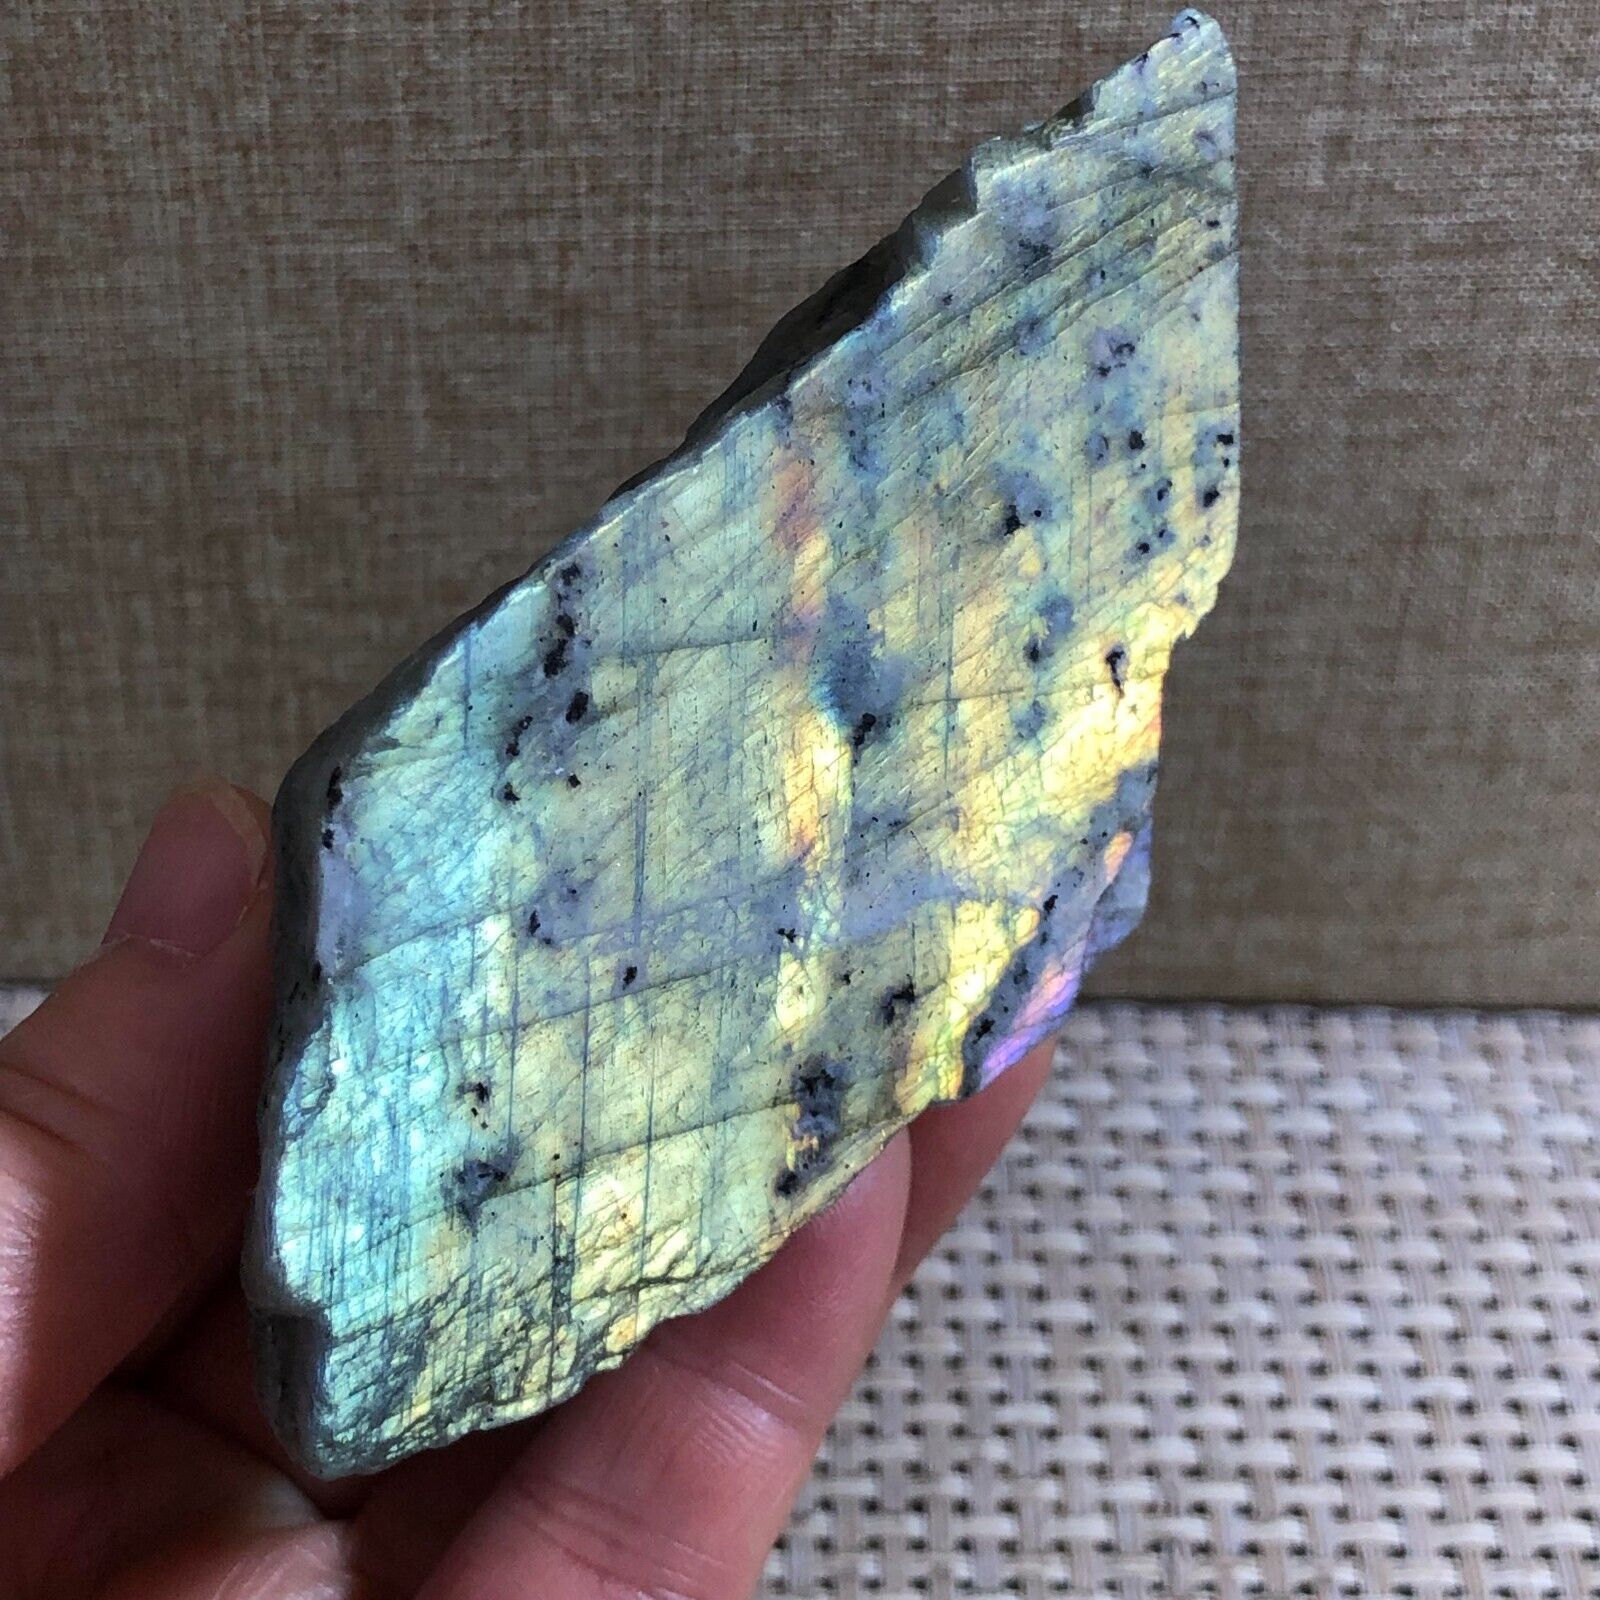 218g Top Best Labradorite Crystal Stone Natural Rough Mineral Specimen d1653